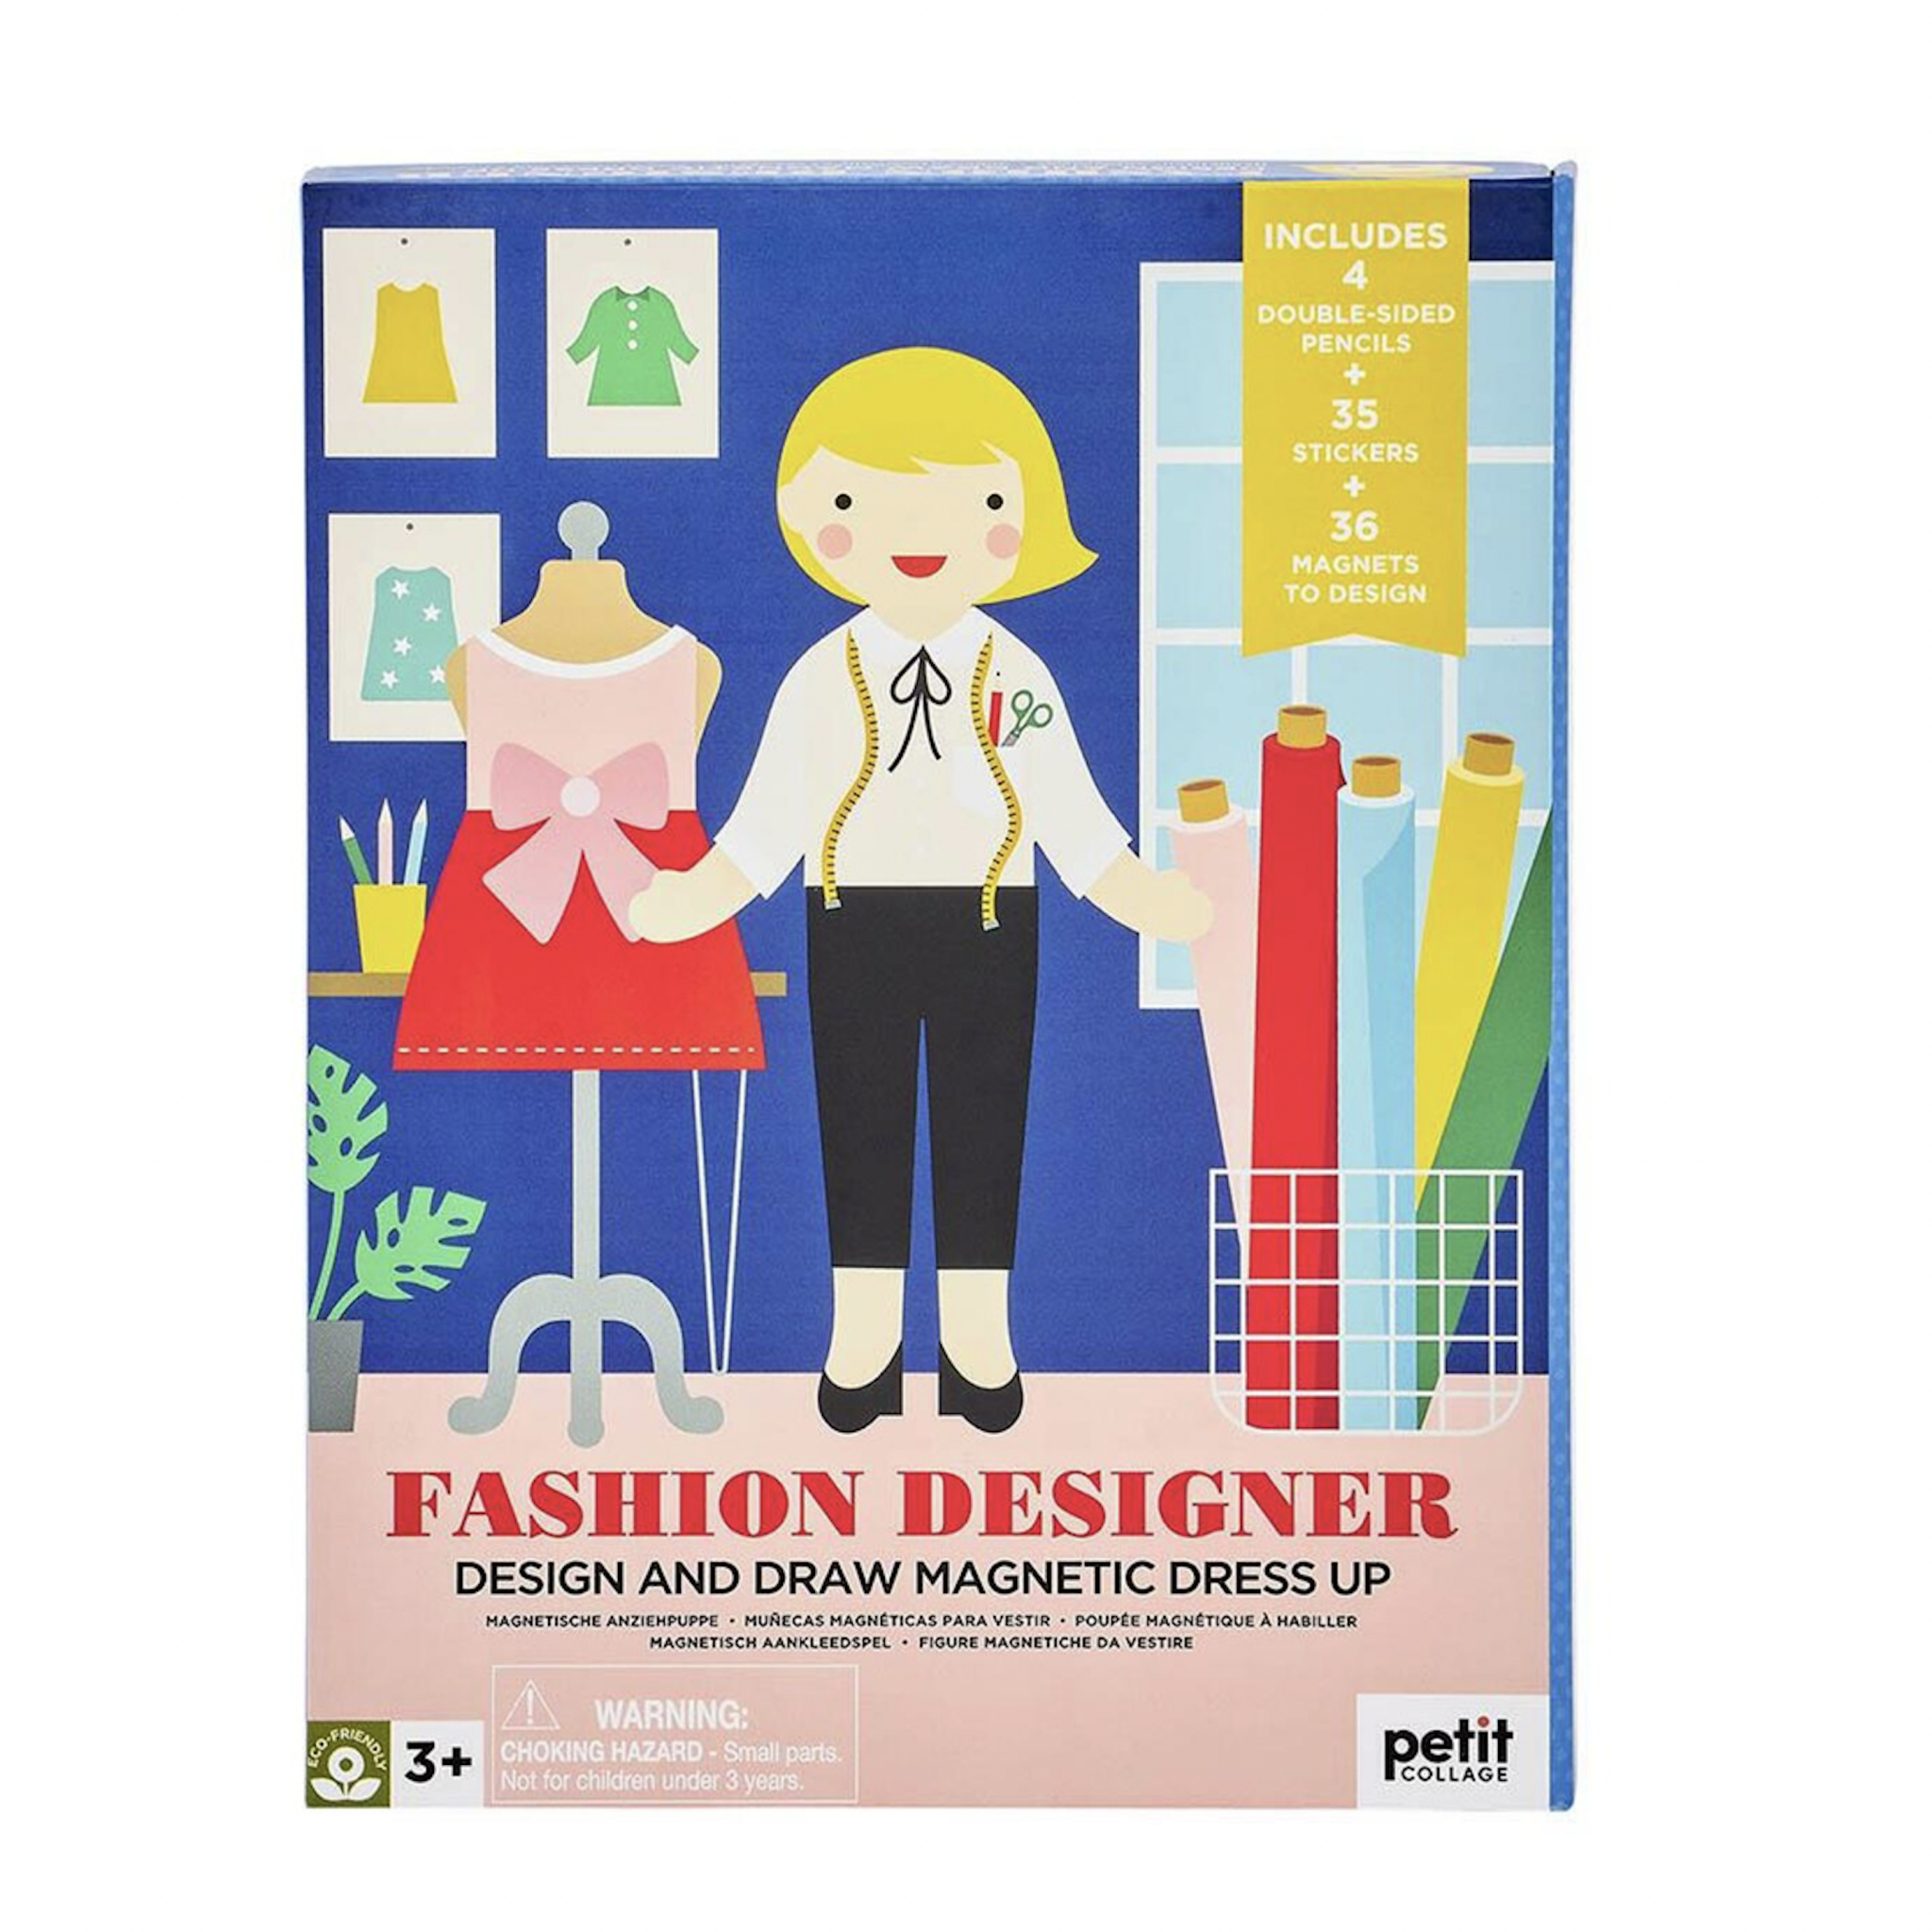 Fashion and Designer Books